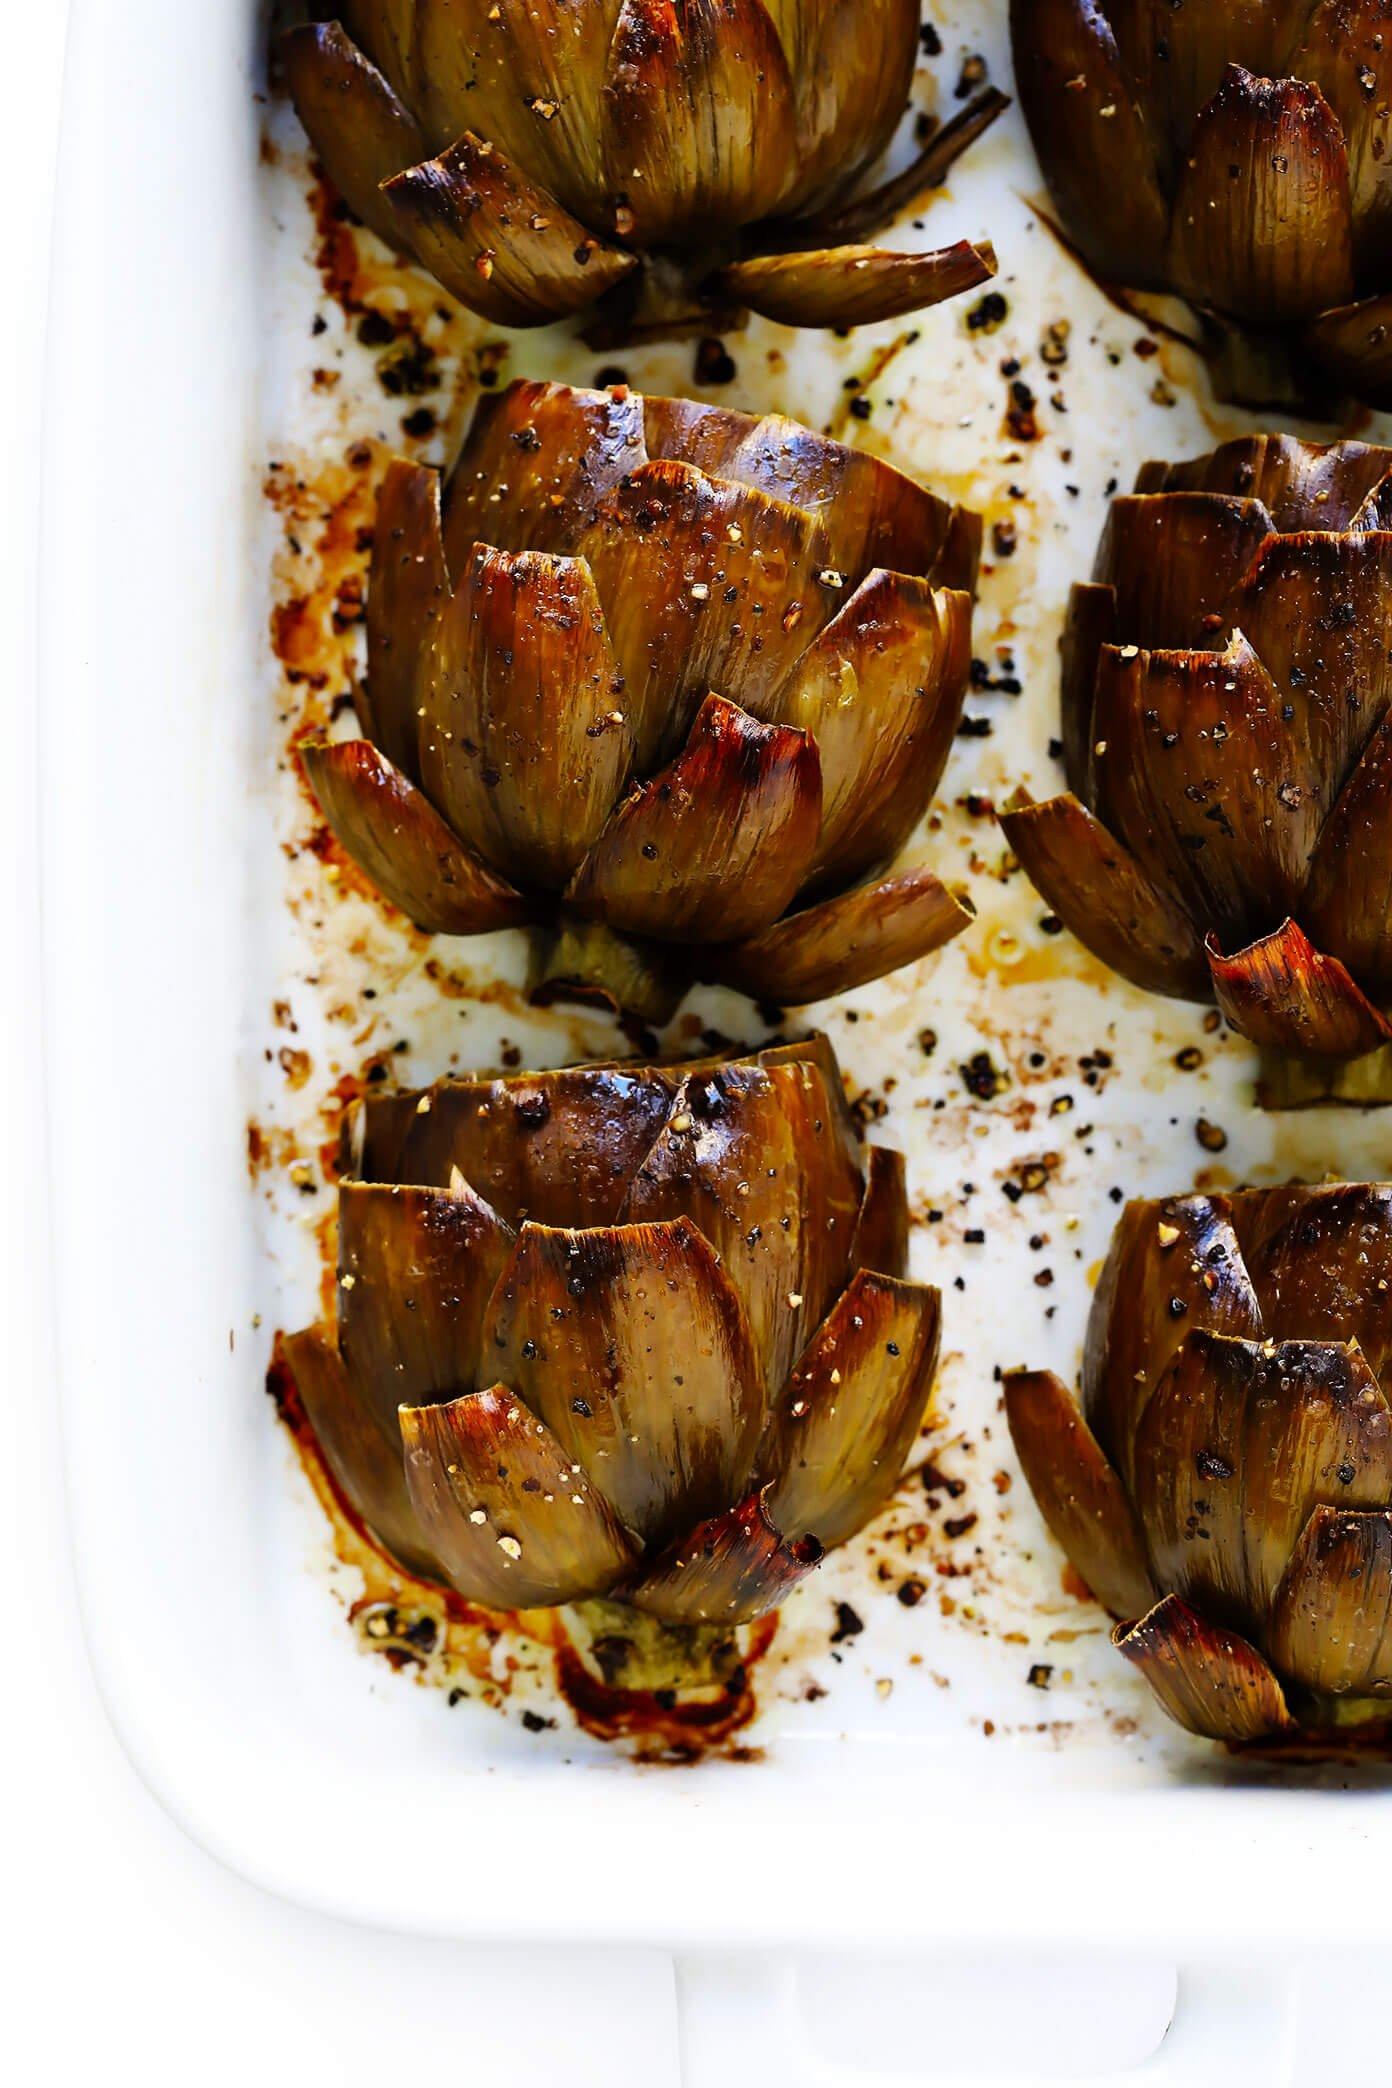 The Most Amazing Roasted Artichokes Recipe